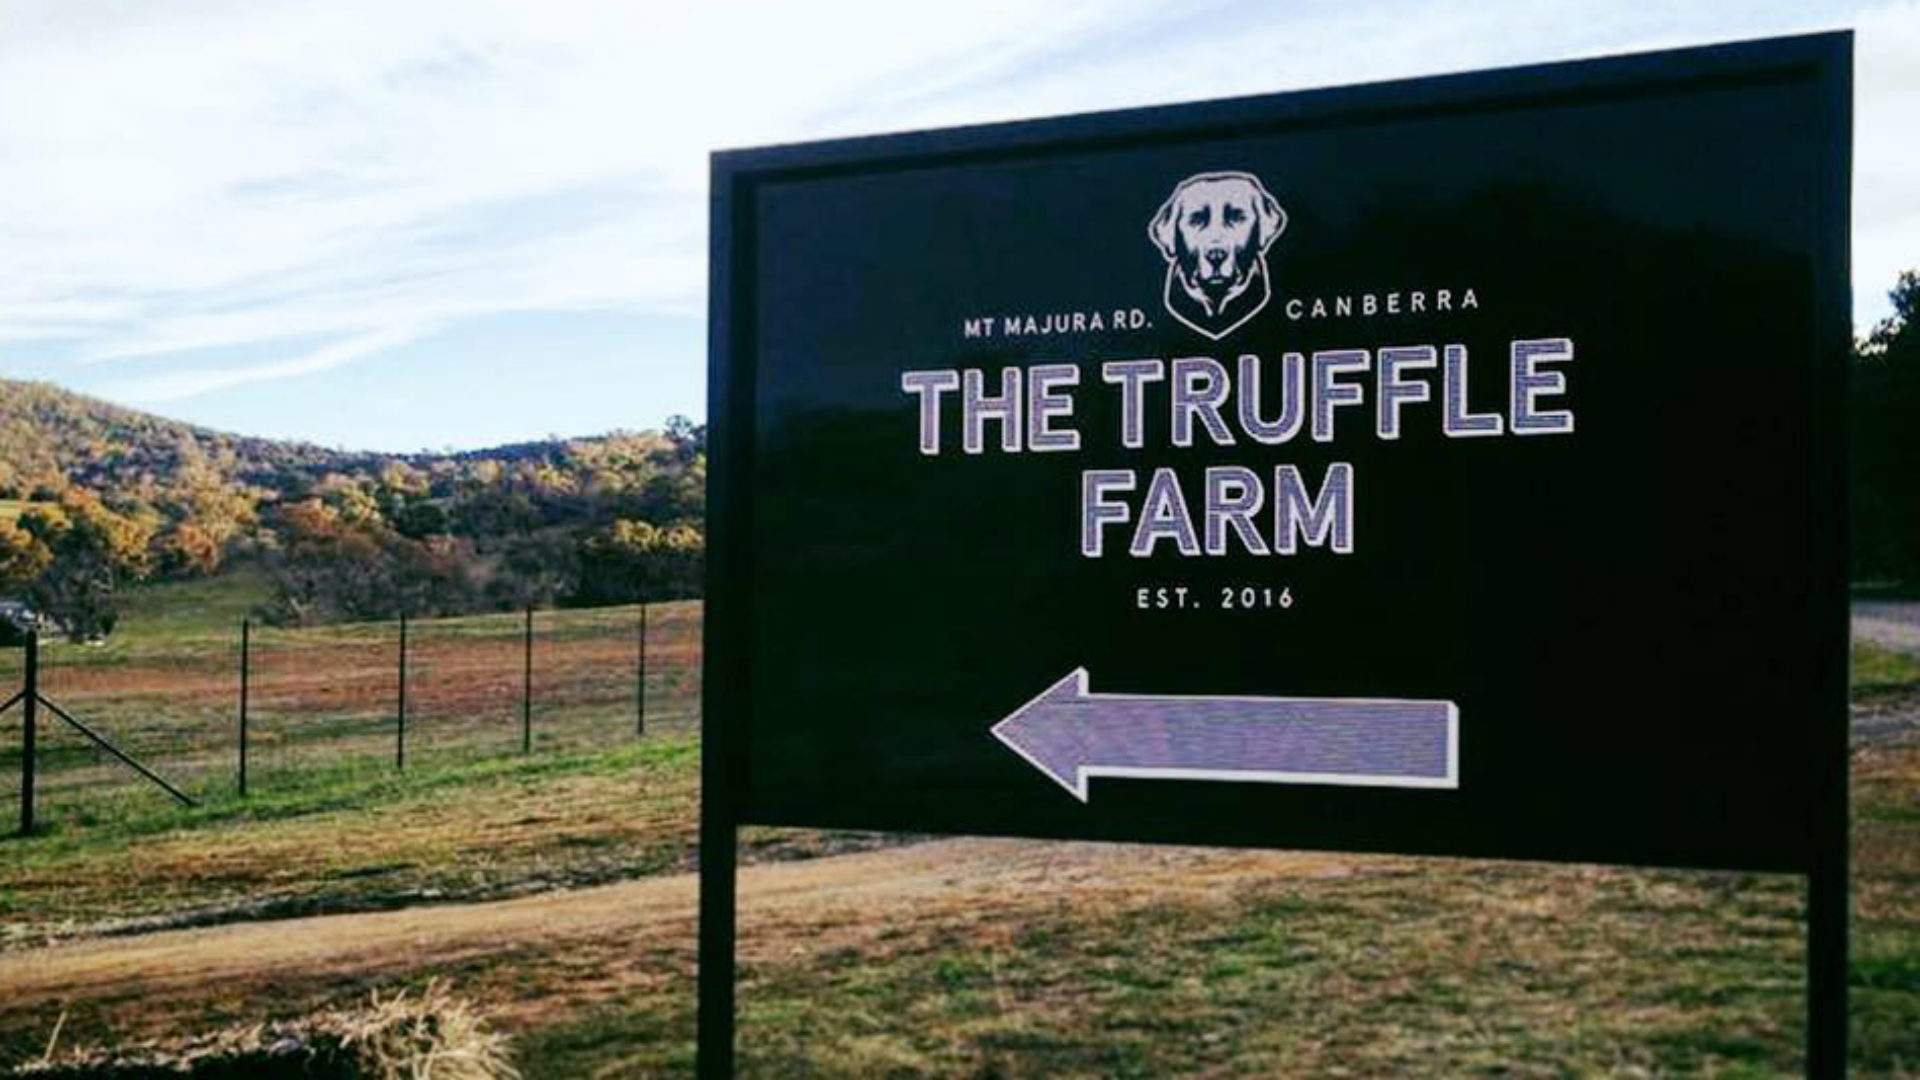 The Truffle Farm Canberra